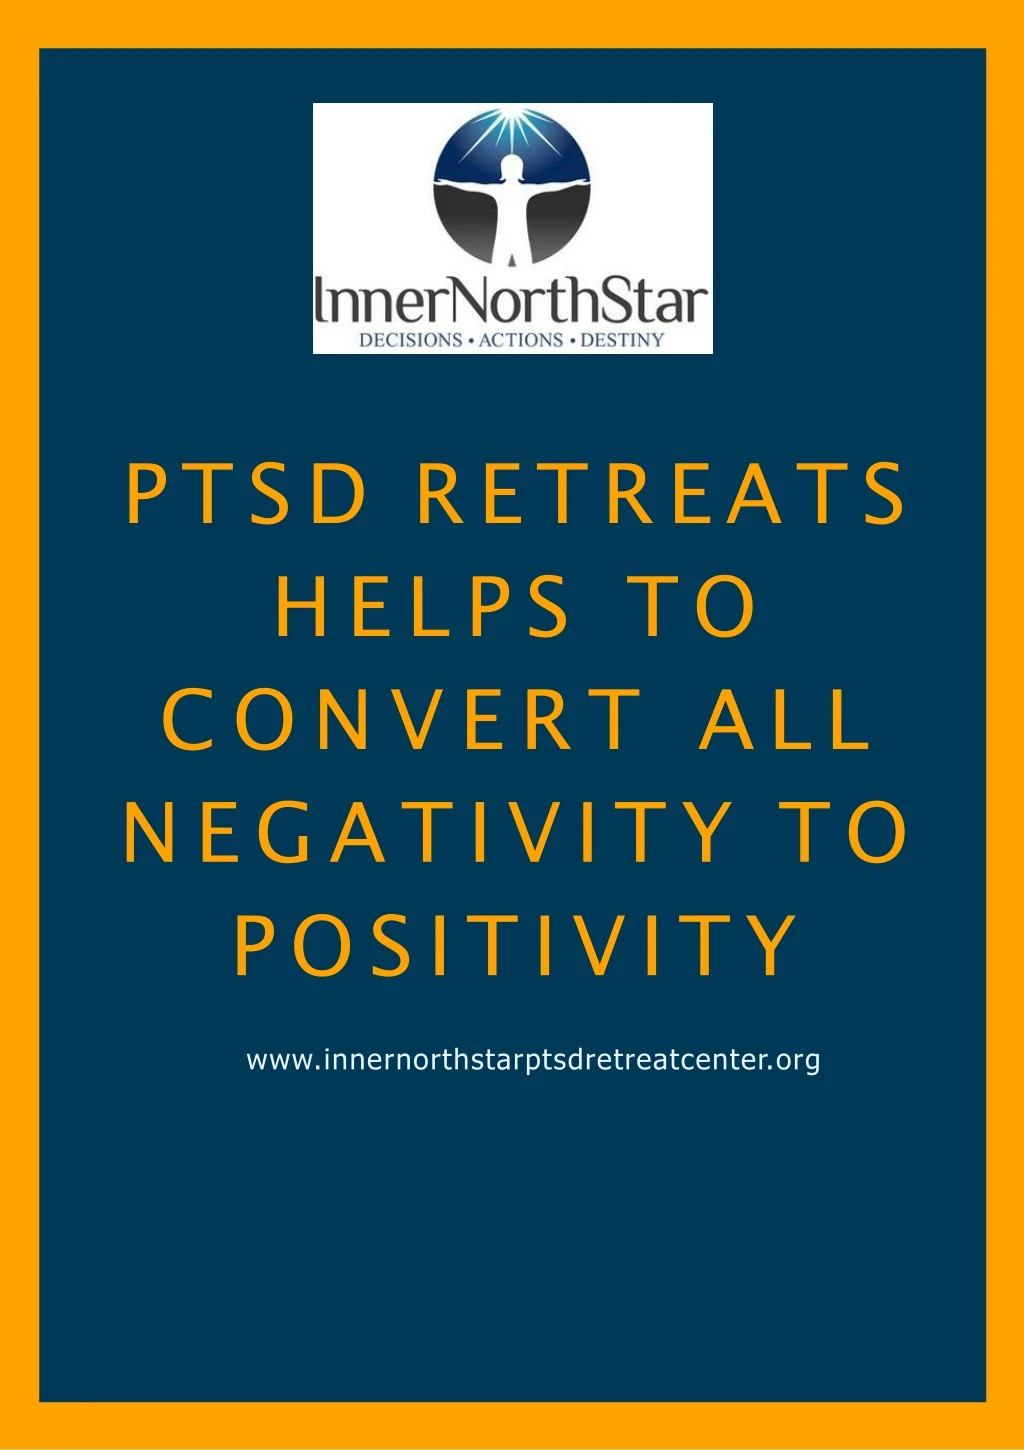 ptsd retreats helps to convert all negativity